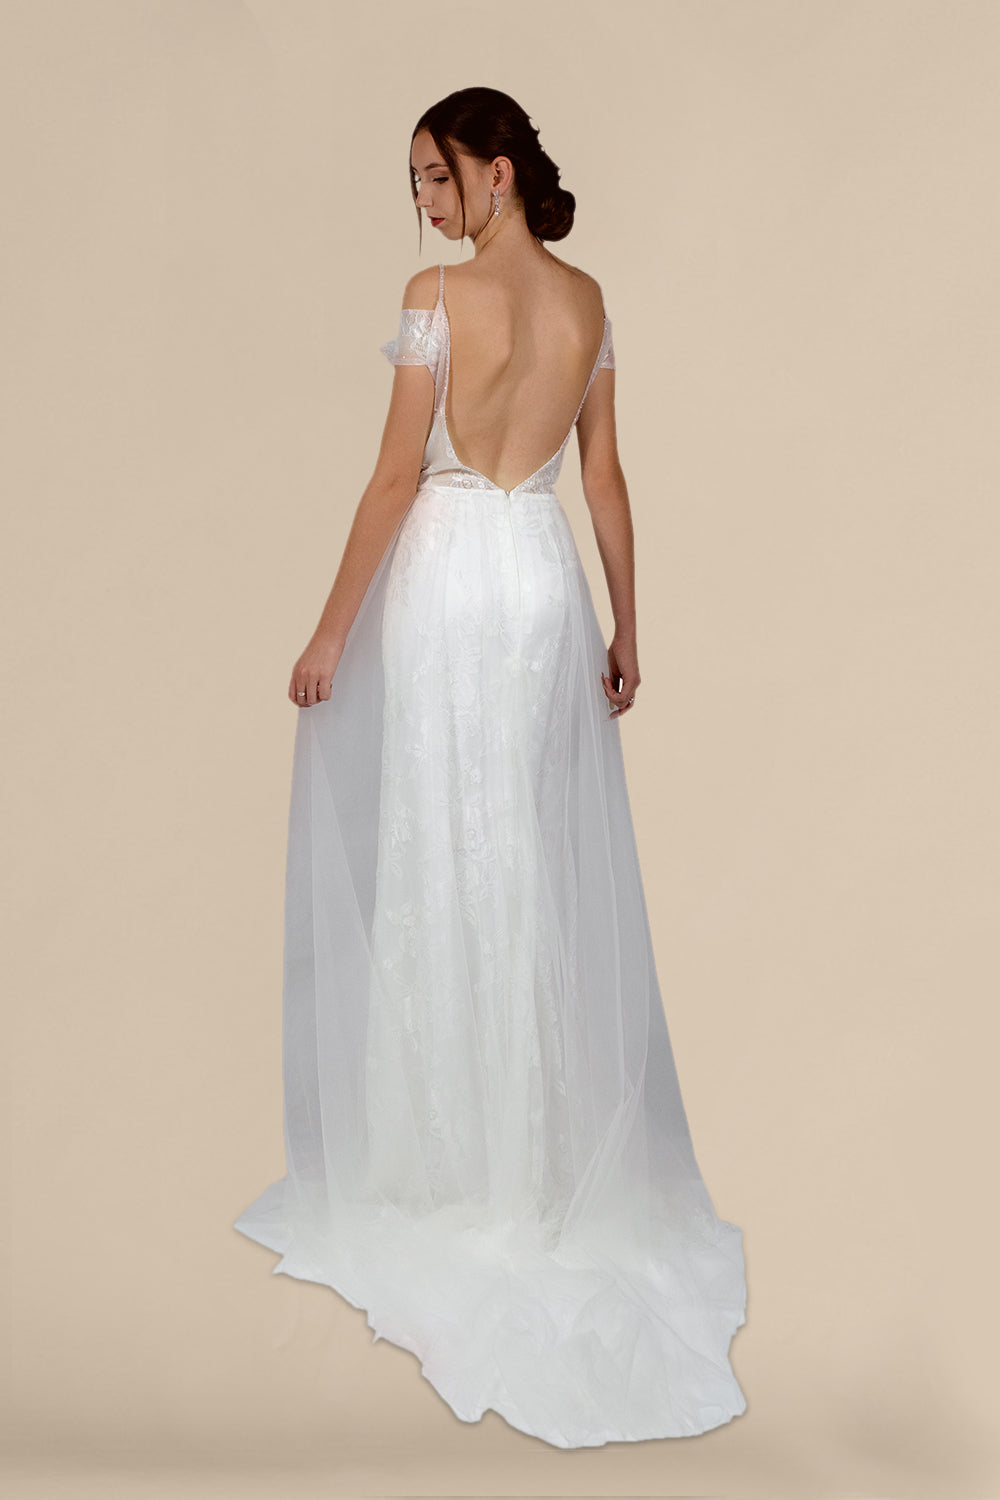 customized wedding dresses boho bridal gowns perth australia envious bridal & formal